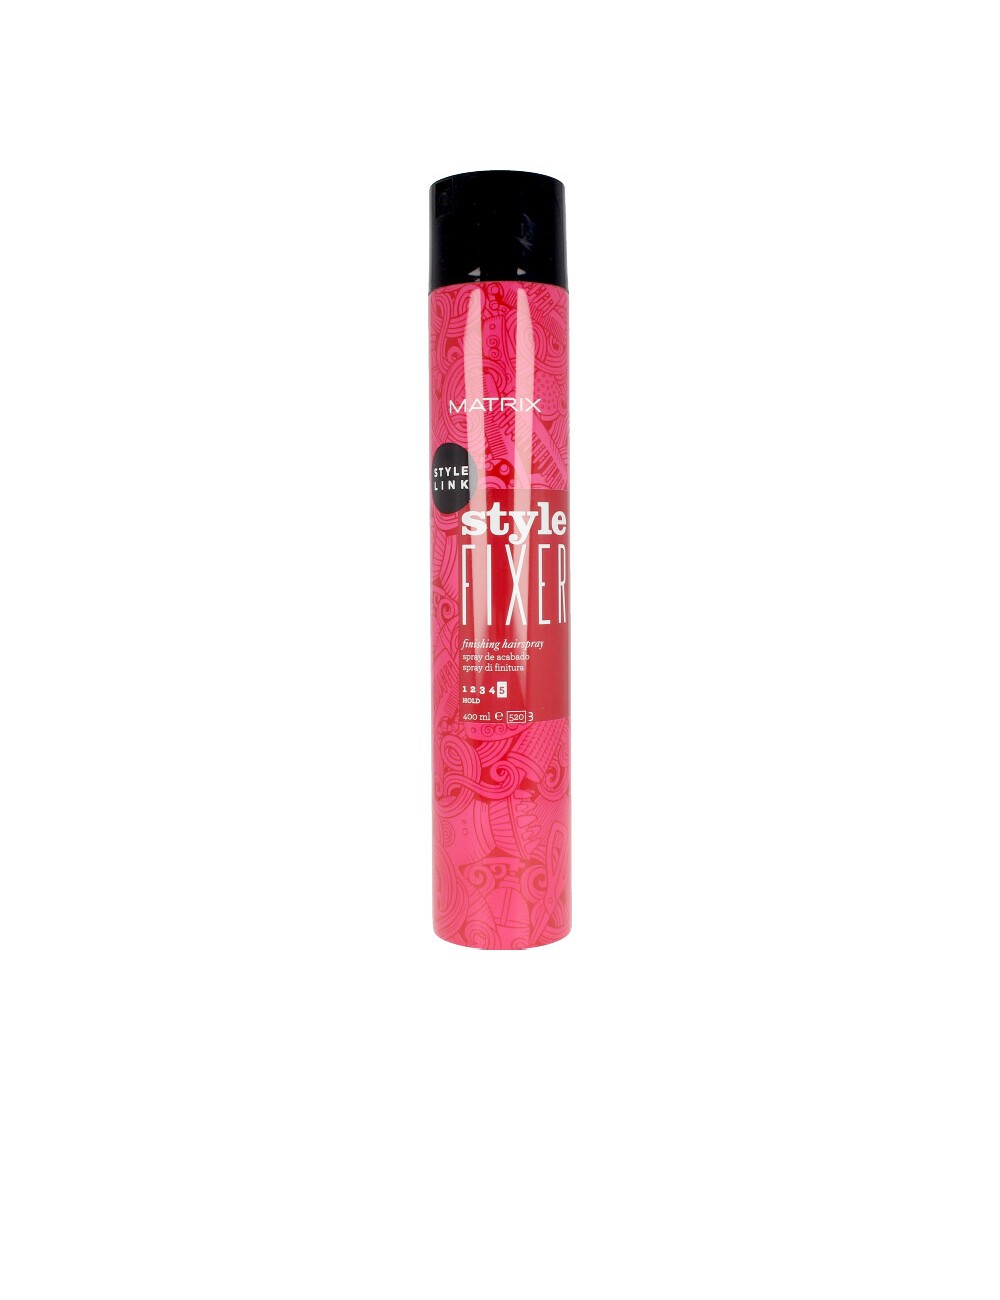 STYLE LINK perfect finish hair spray 400 ml NE106342